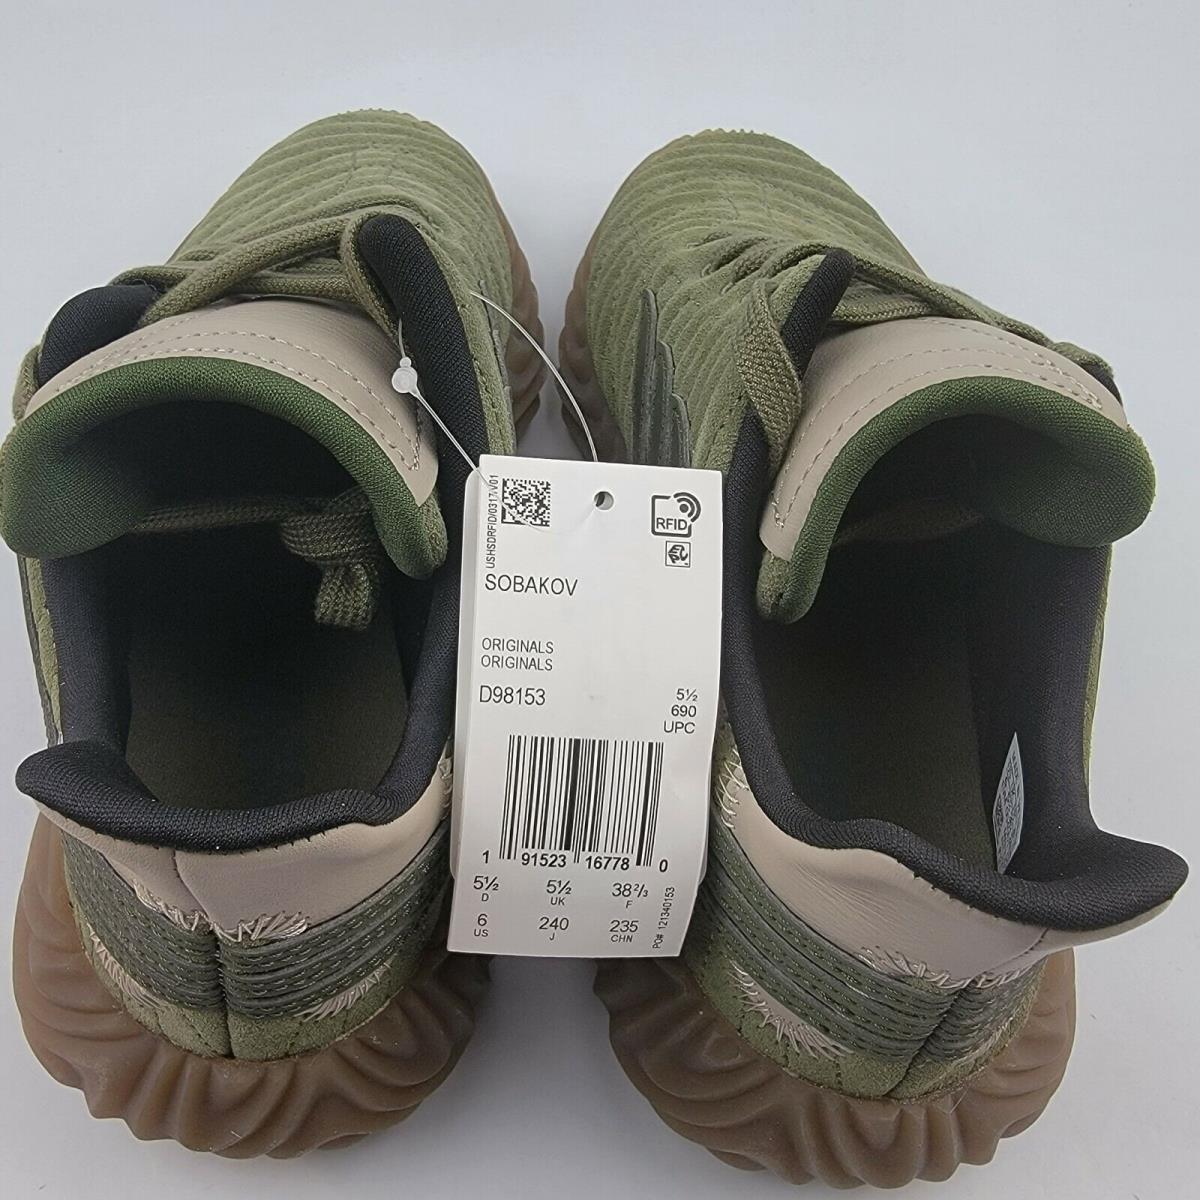 Adidas shoes Sobakov - Green 8